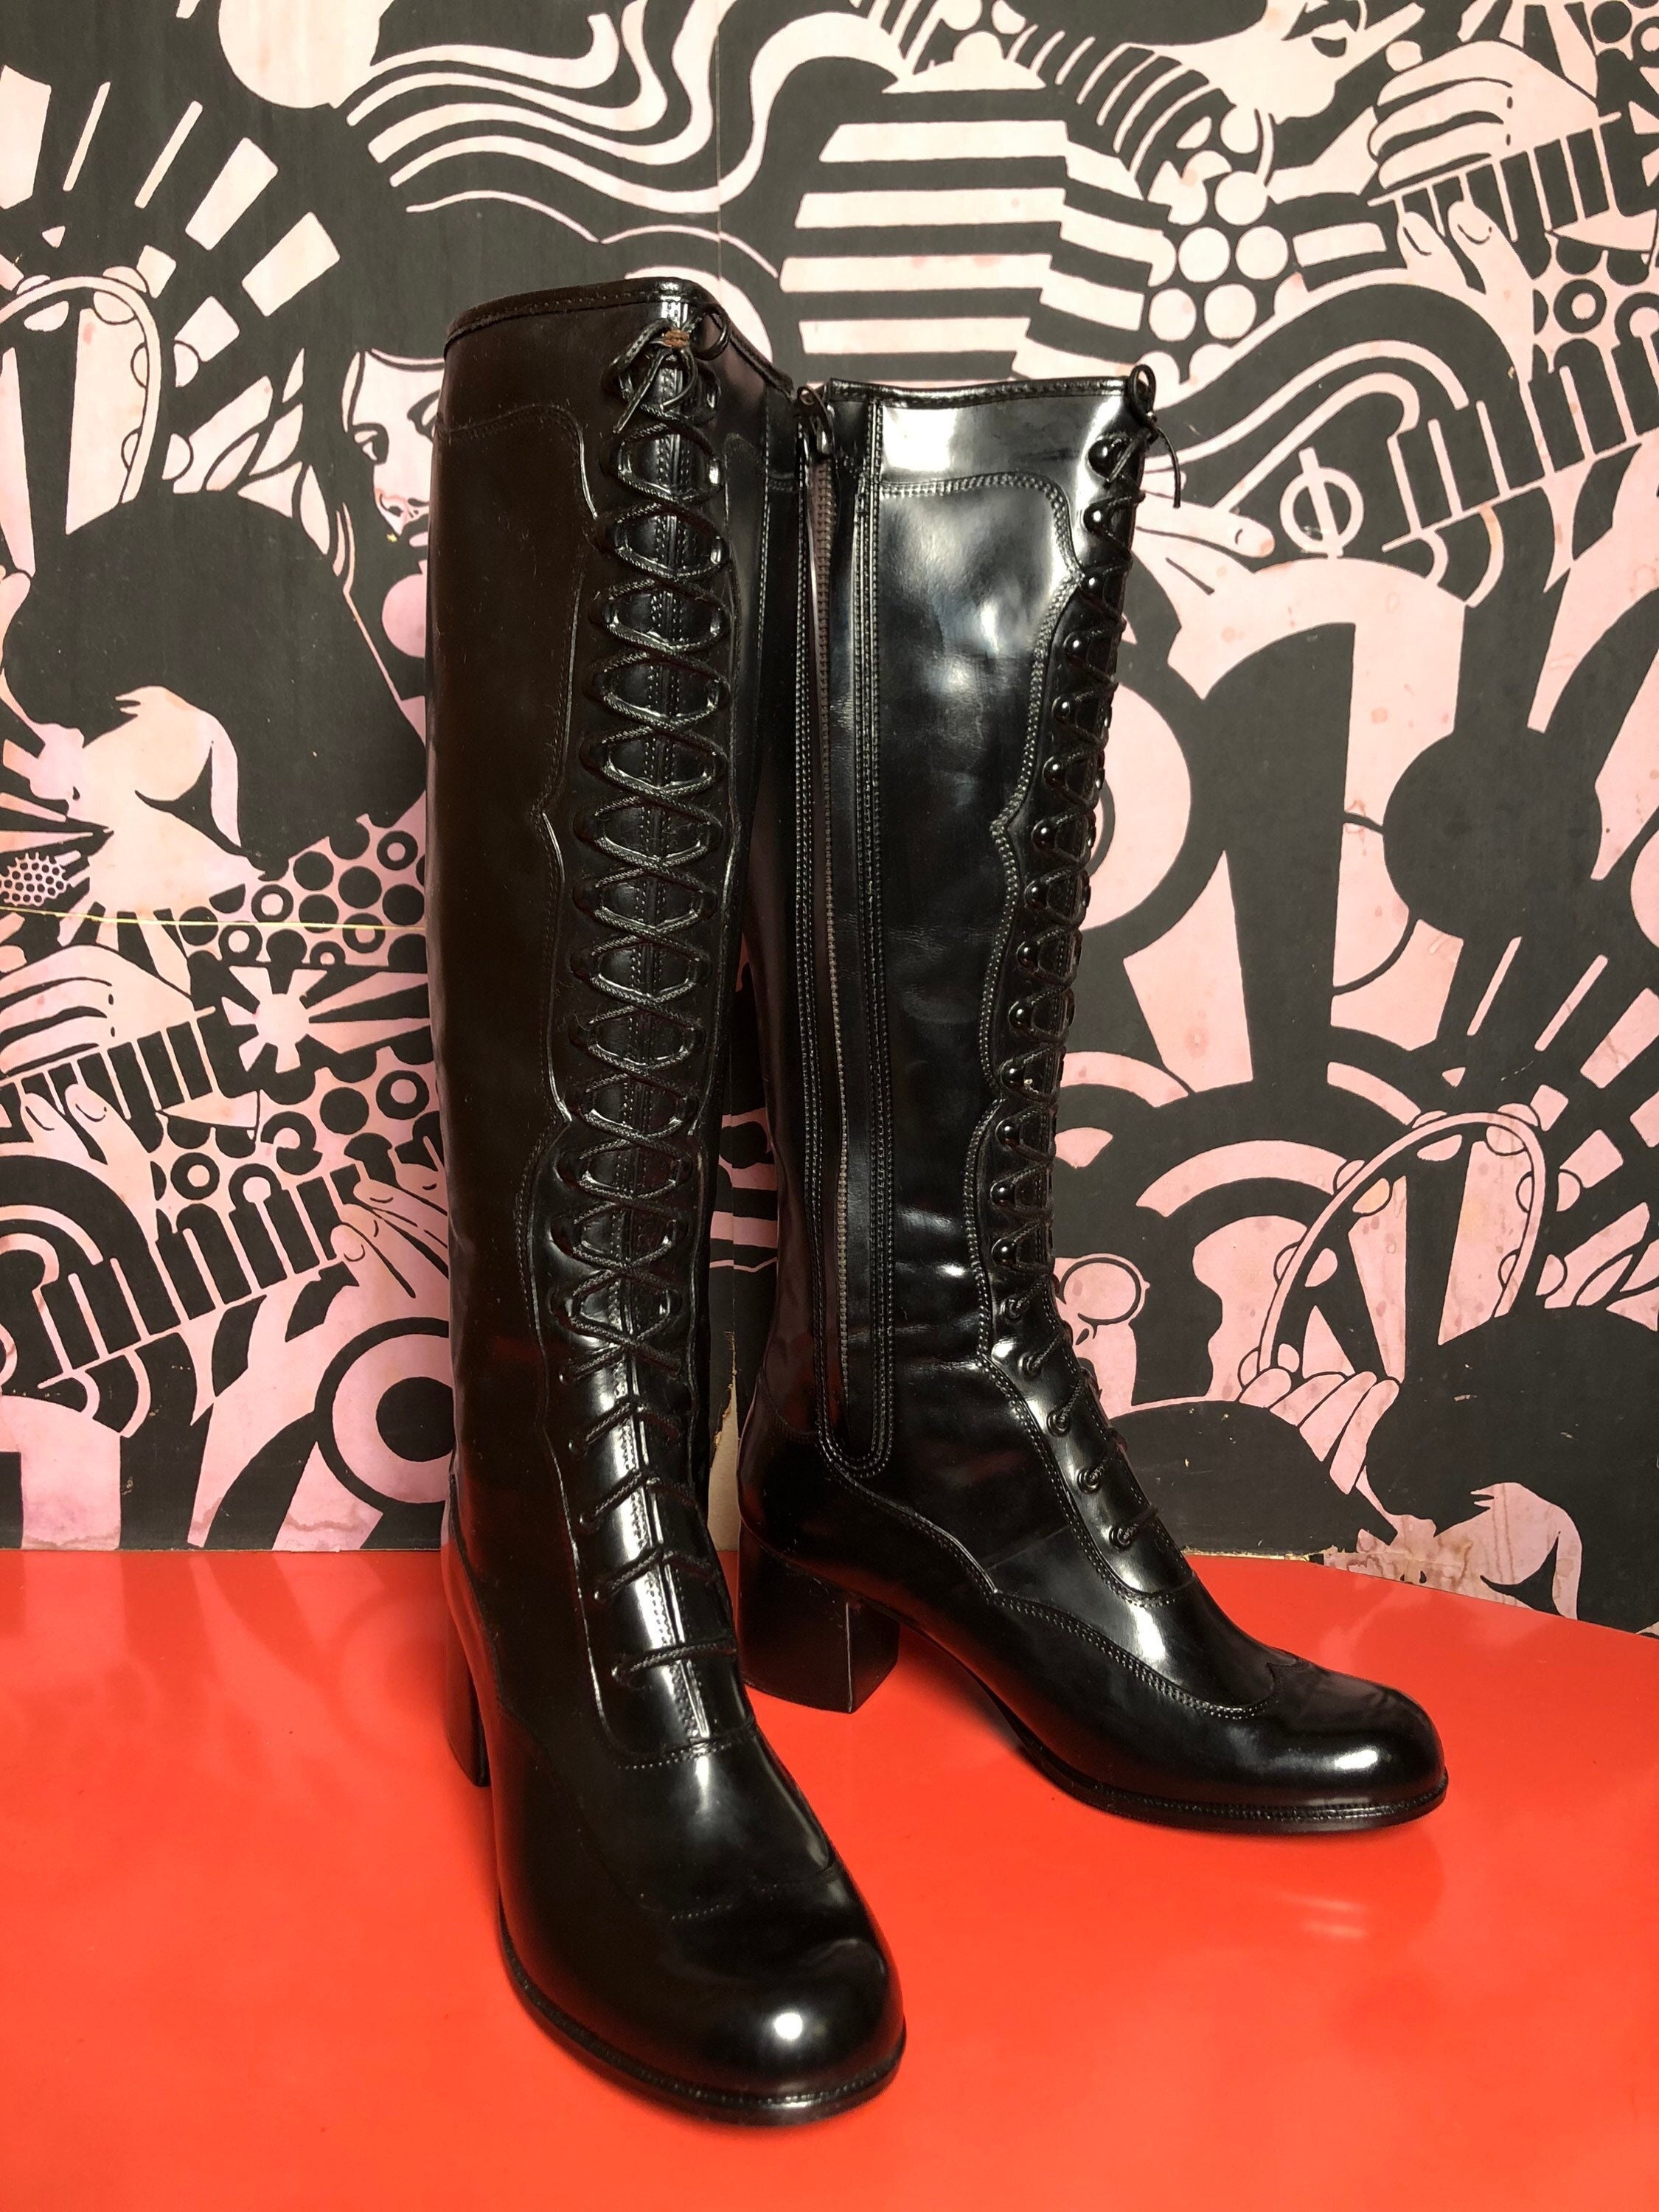  Evshine Women's Knee High Rain Boots - Narrow Calf - Fashion  Waterproof Tall Wellies Rain Shoes，Glossy Black，6